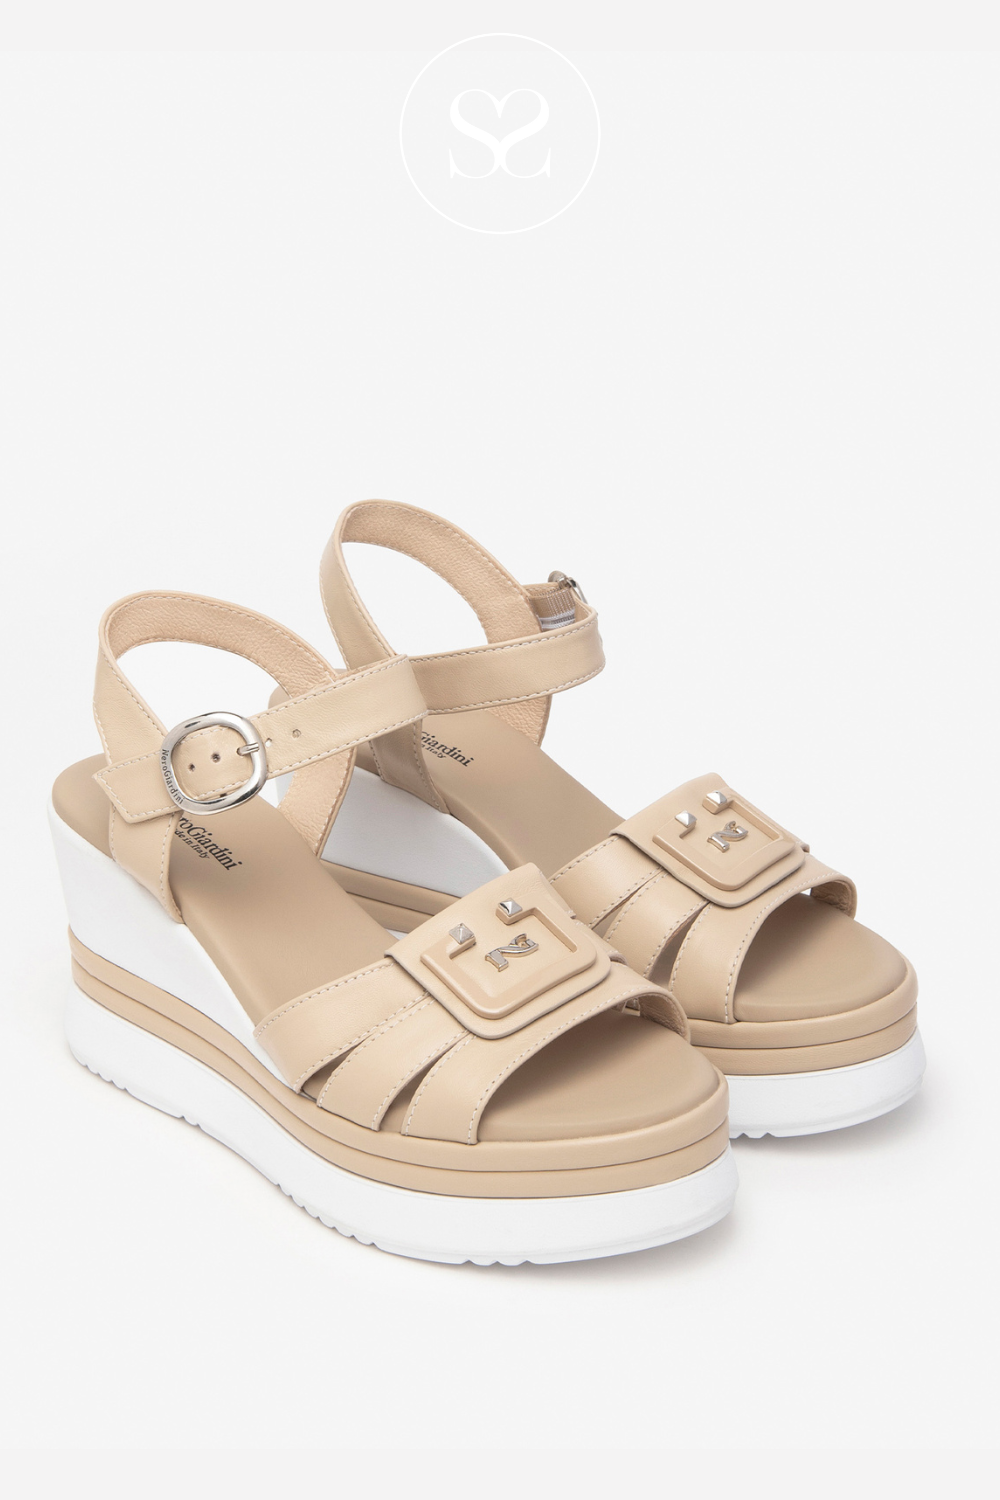 Nero Giardini beige leather wedge sandals with white sole E410570D